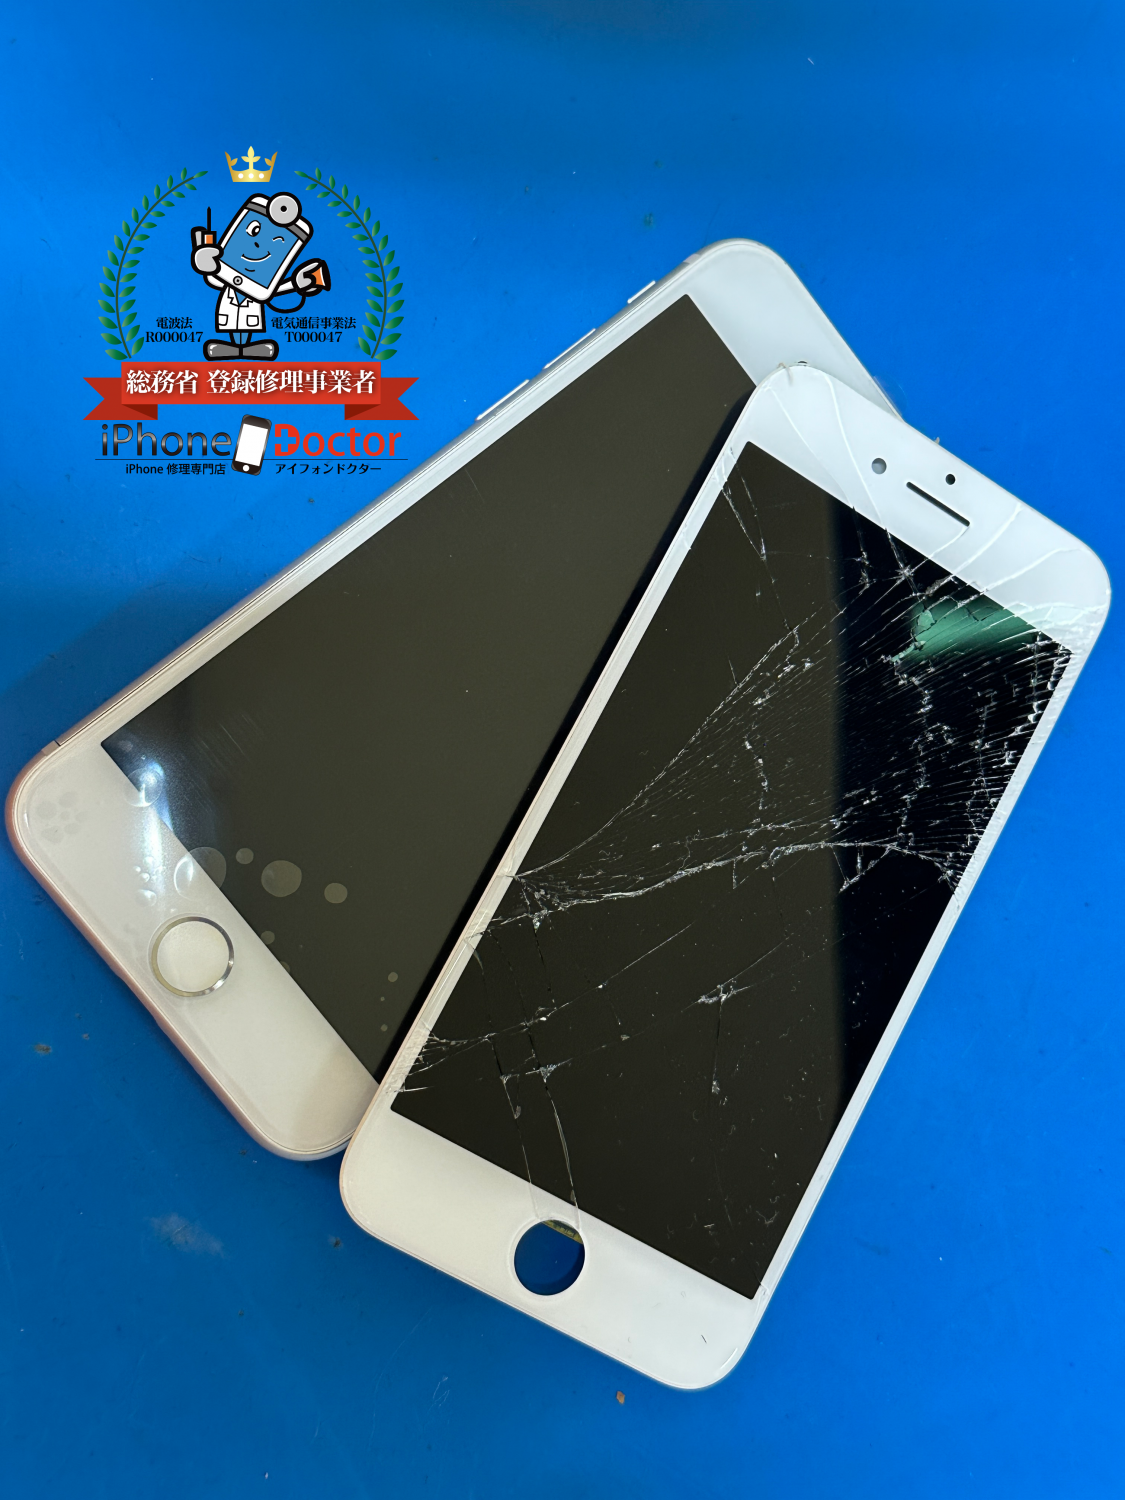 iPhone6ガラス割れ、液晶破損